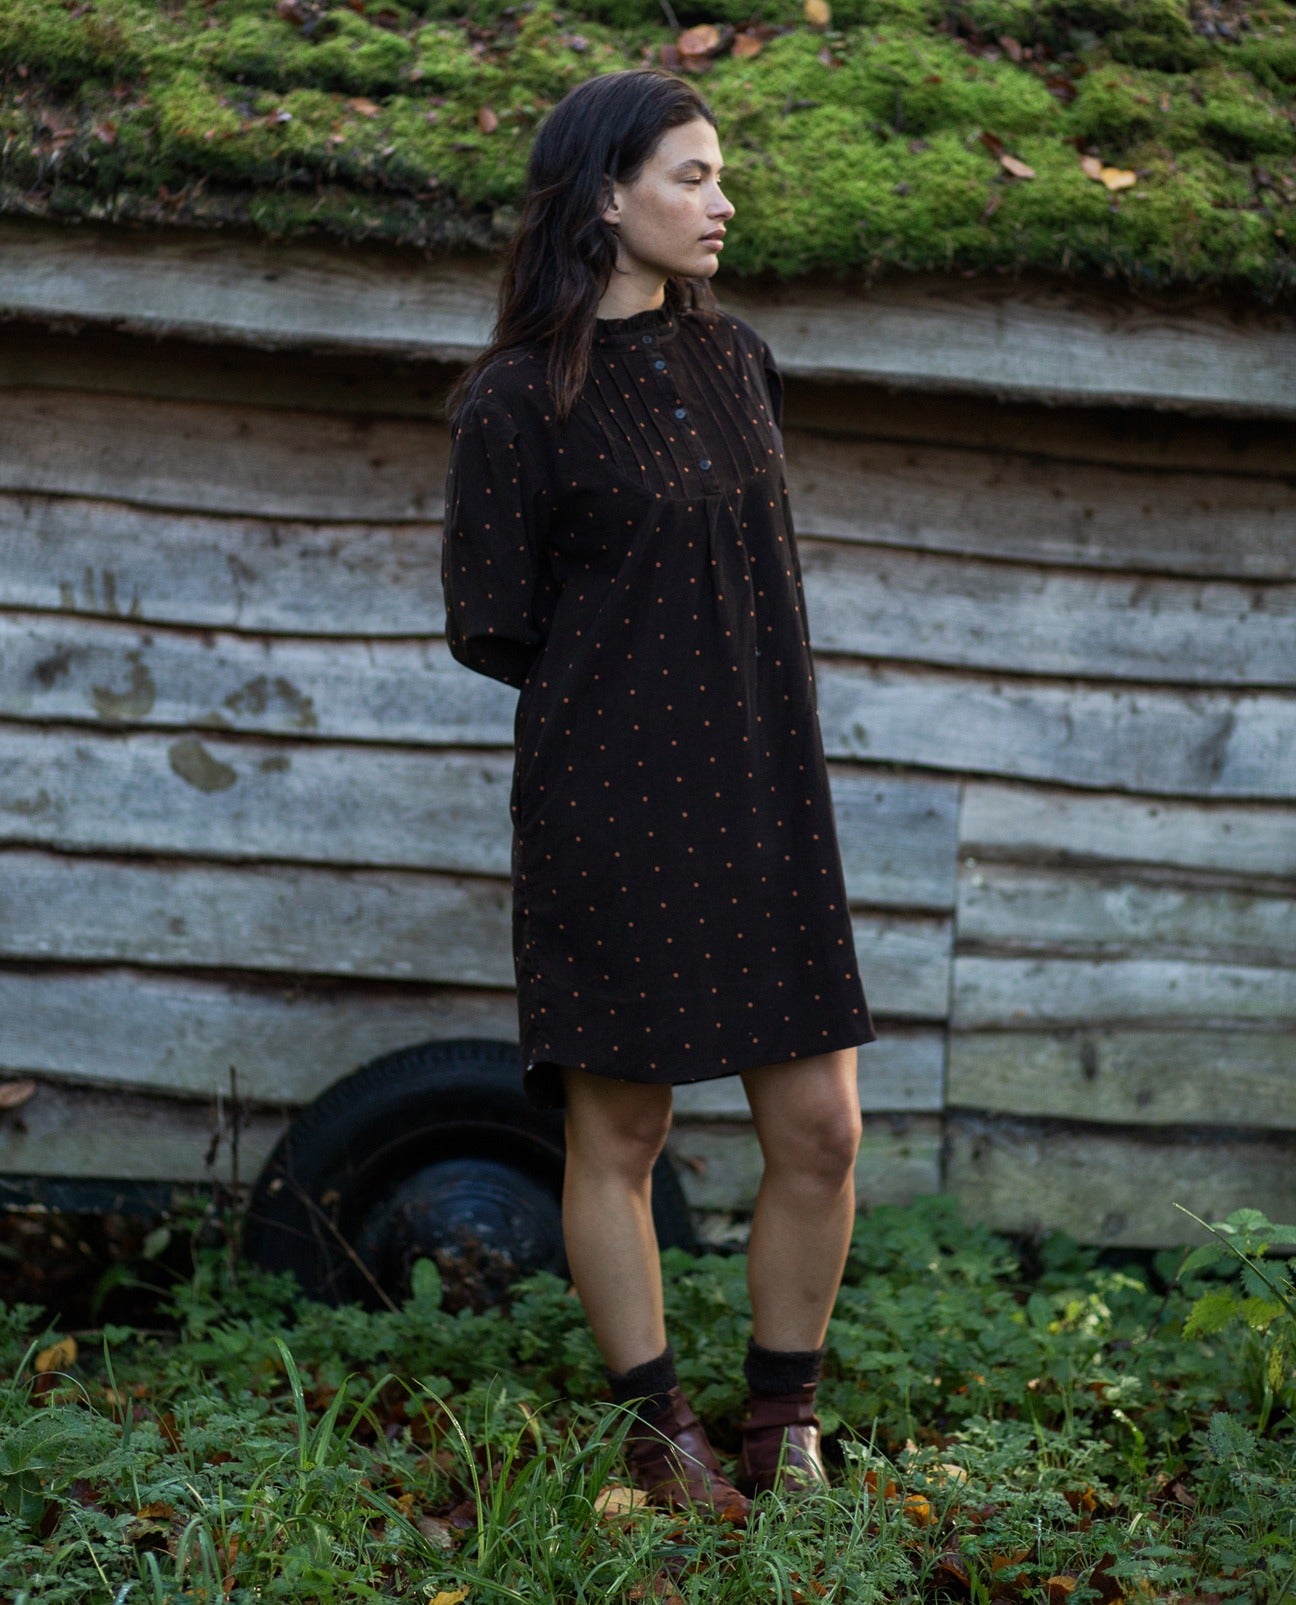 Phoebe-Paige Printed Cord Dress in Brown and Tan Polka Dot